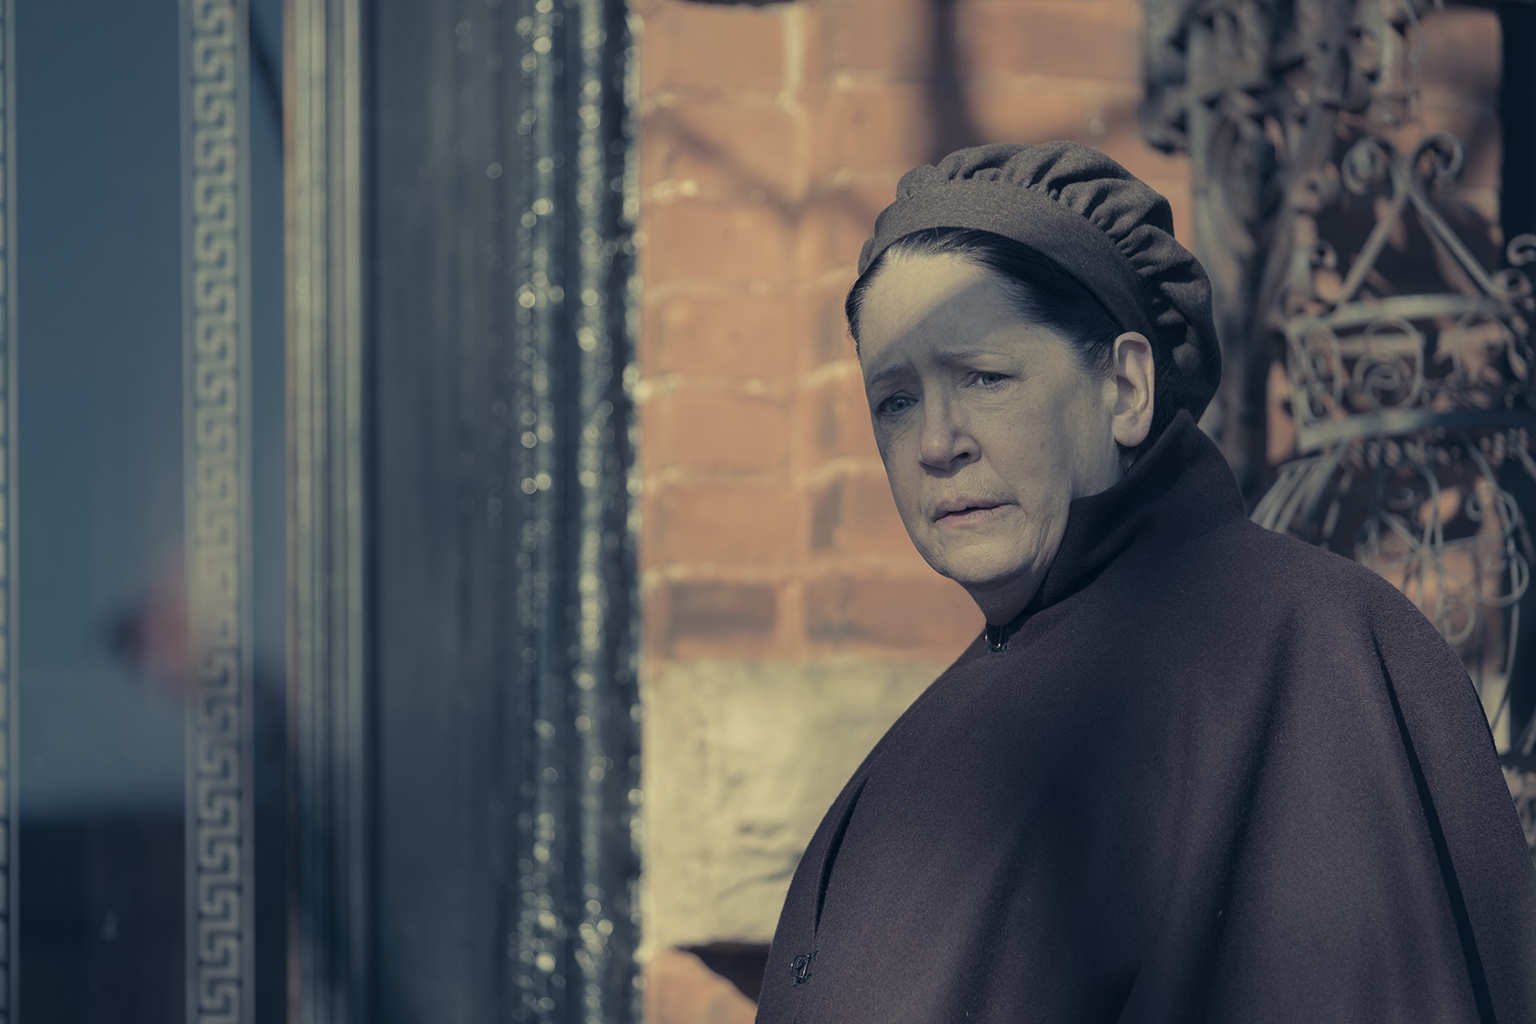 Pictured: Aunt Lydia (Ann Dowd) in Hulu's 'The Handmaid's Tale' (George Kraychyk&mdash;Hulu)